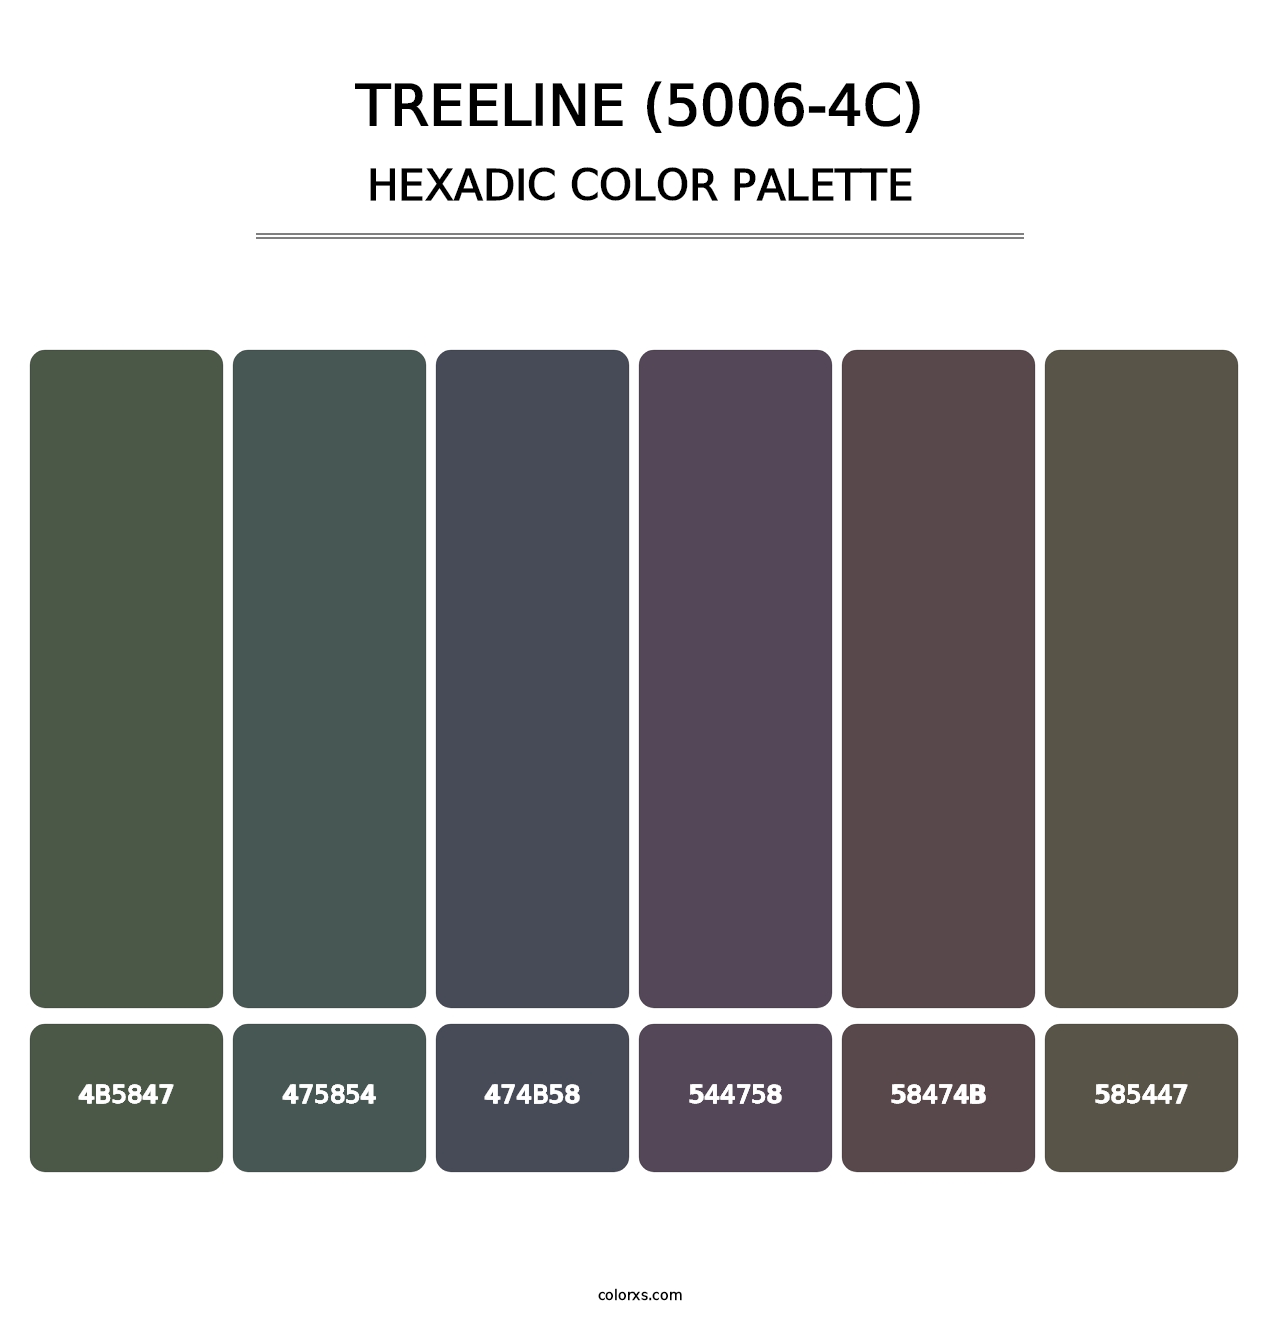 Treeline (5006-4C) - Hexadic Color Palette